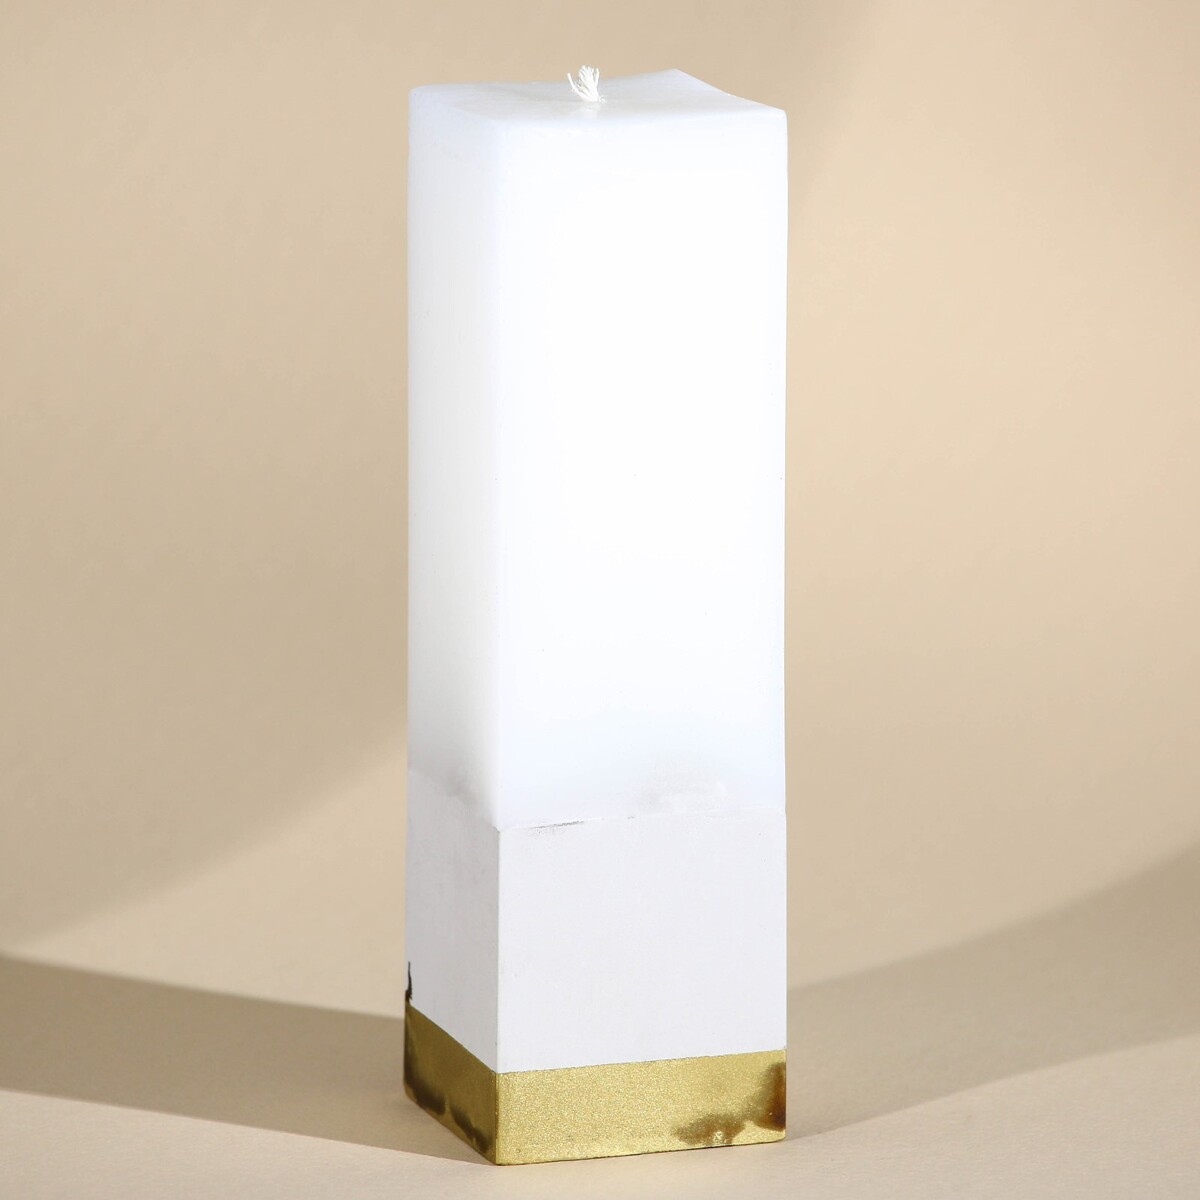 Свеча интерьерная белая с бетоном, низ золото, 5 х 5 х17,5 см свеча интерьерная белая с бетоном 14 х 5 см